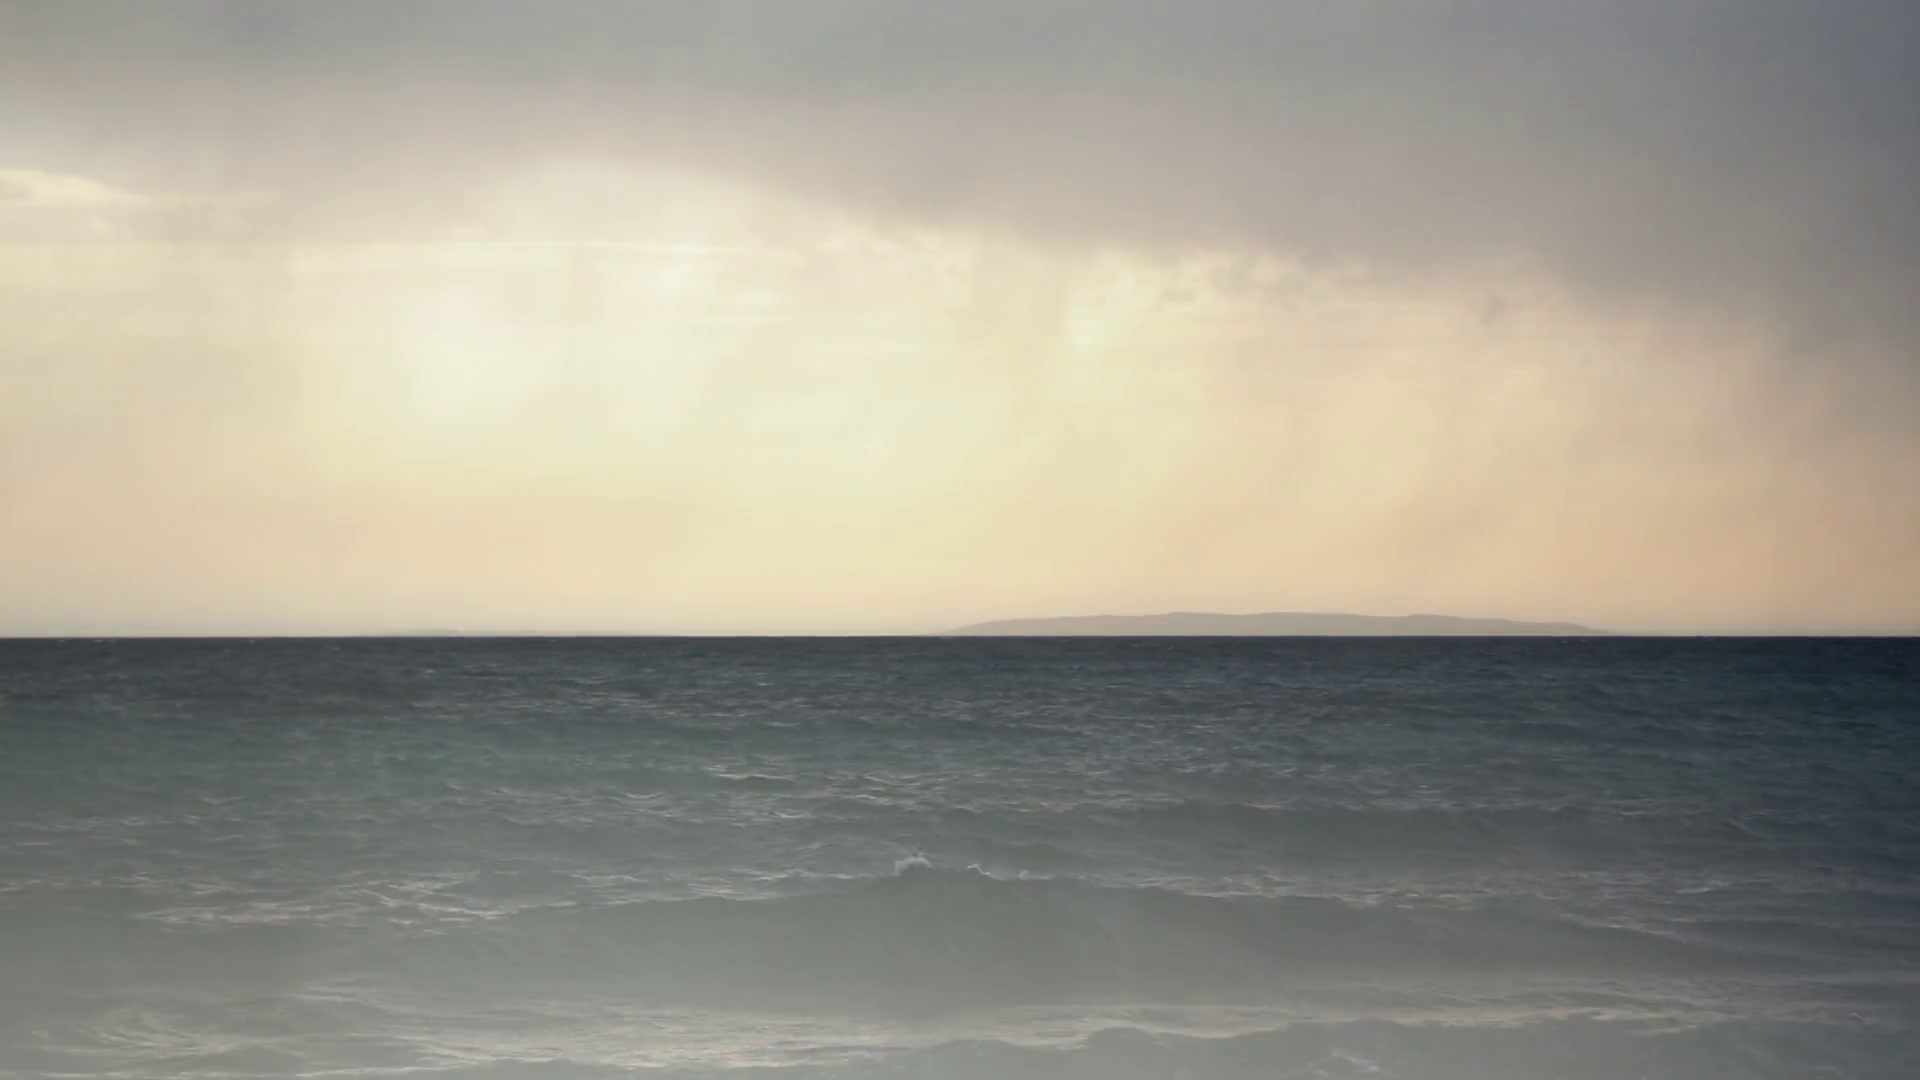 Gray Misty Island Sea Waves Horizon Stock Video Footage - VideoBlocks